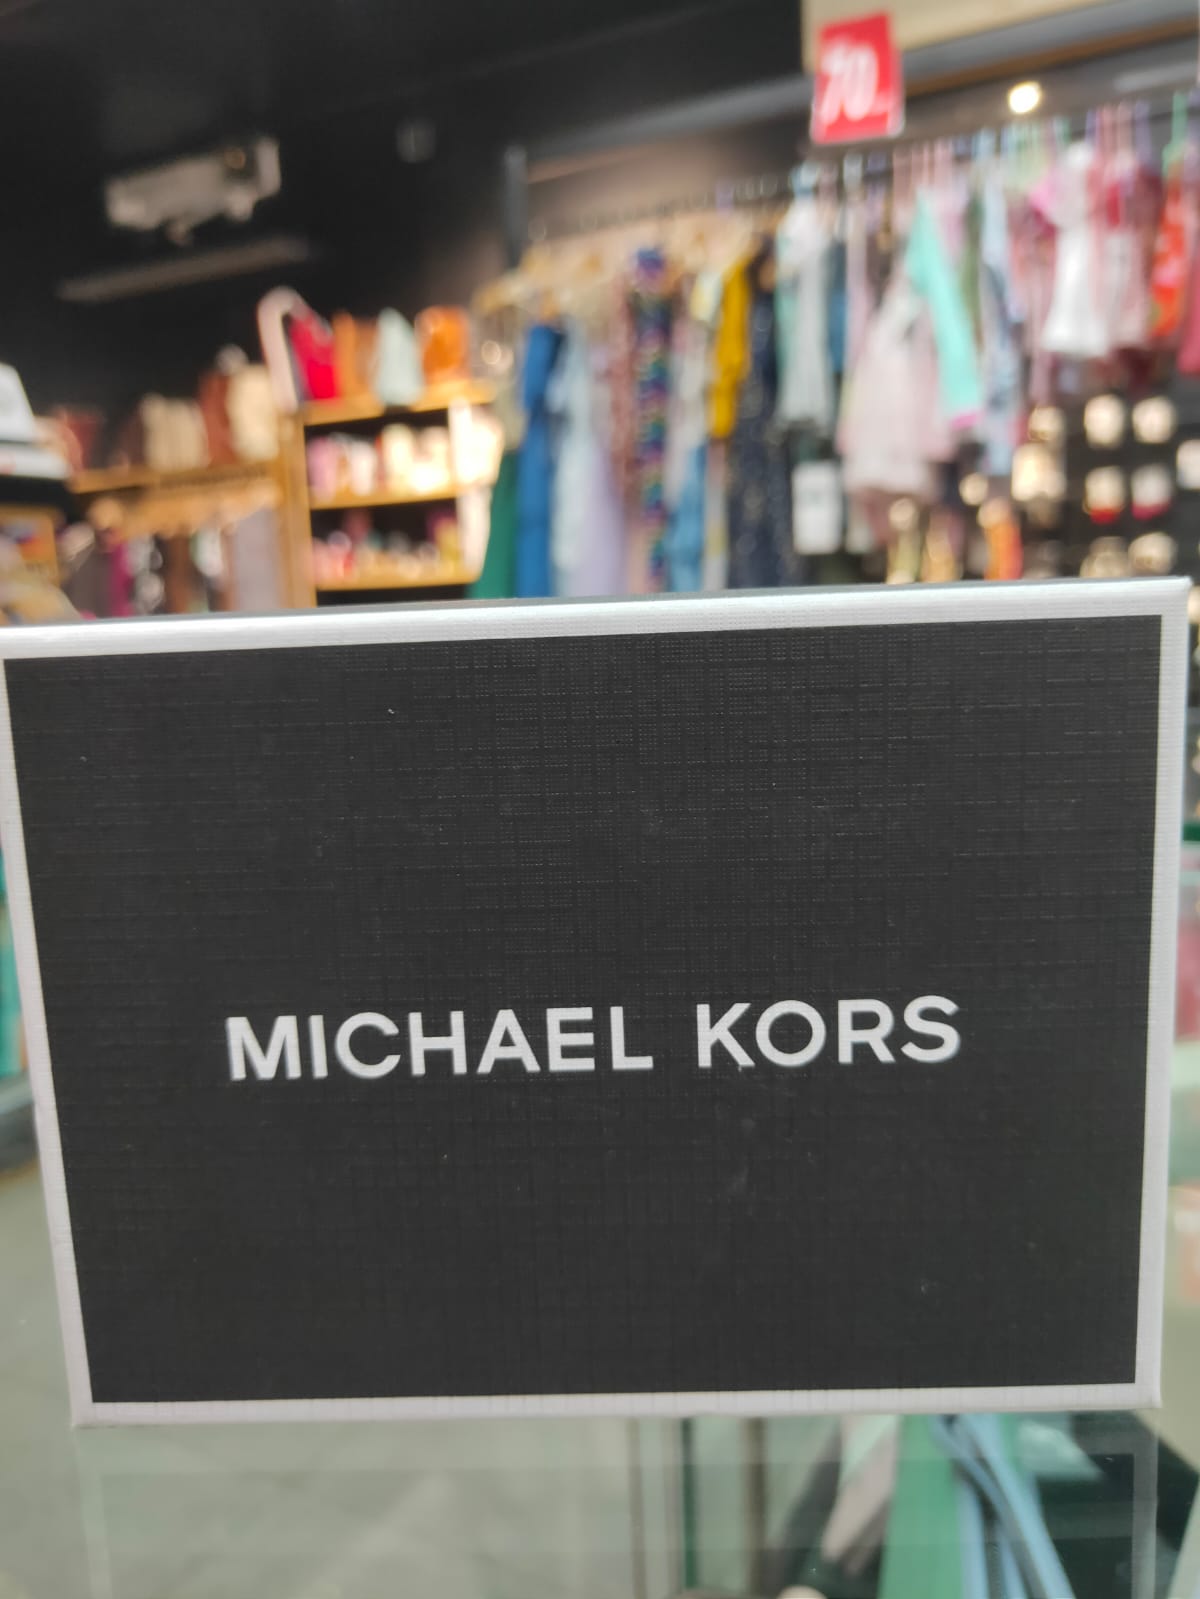 Michael Kors Card Case